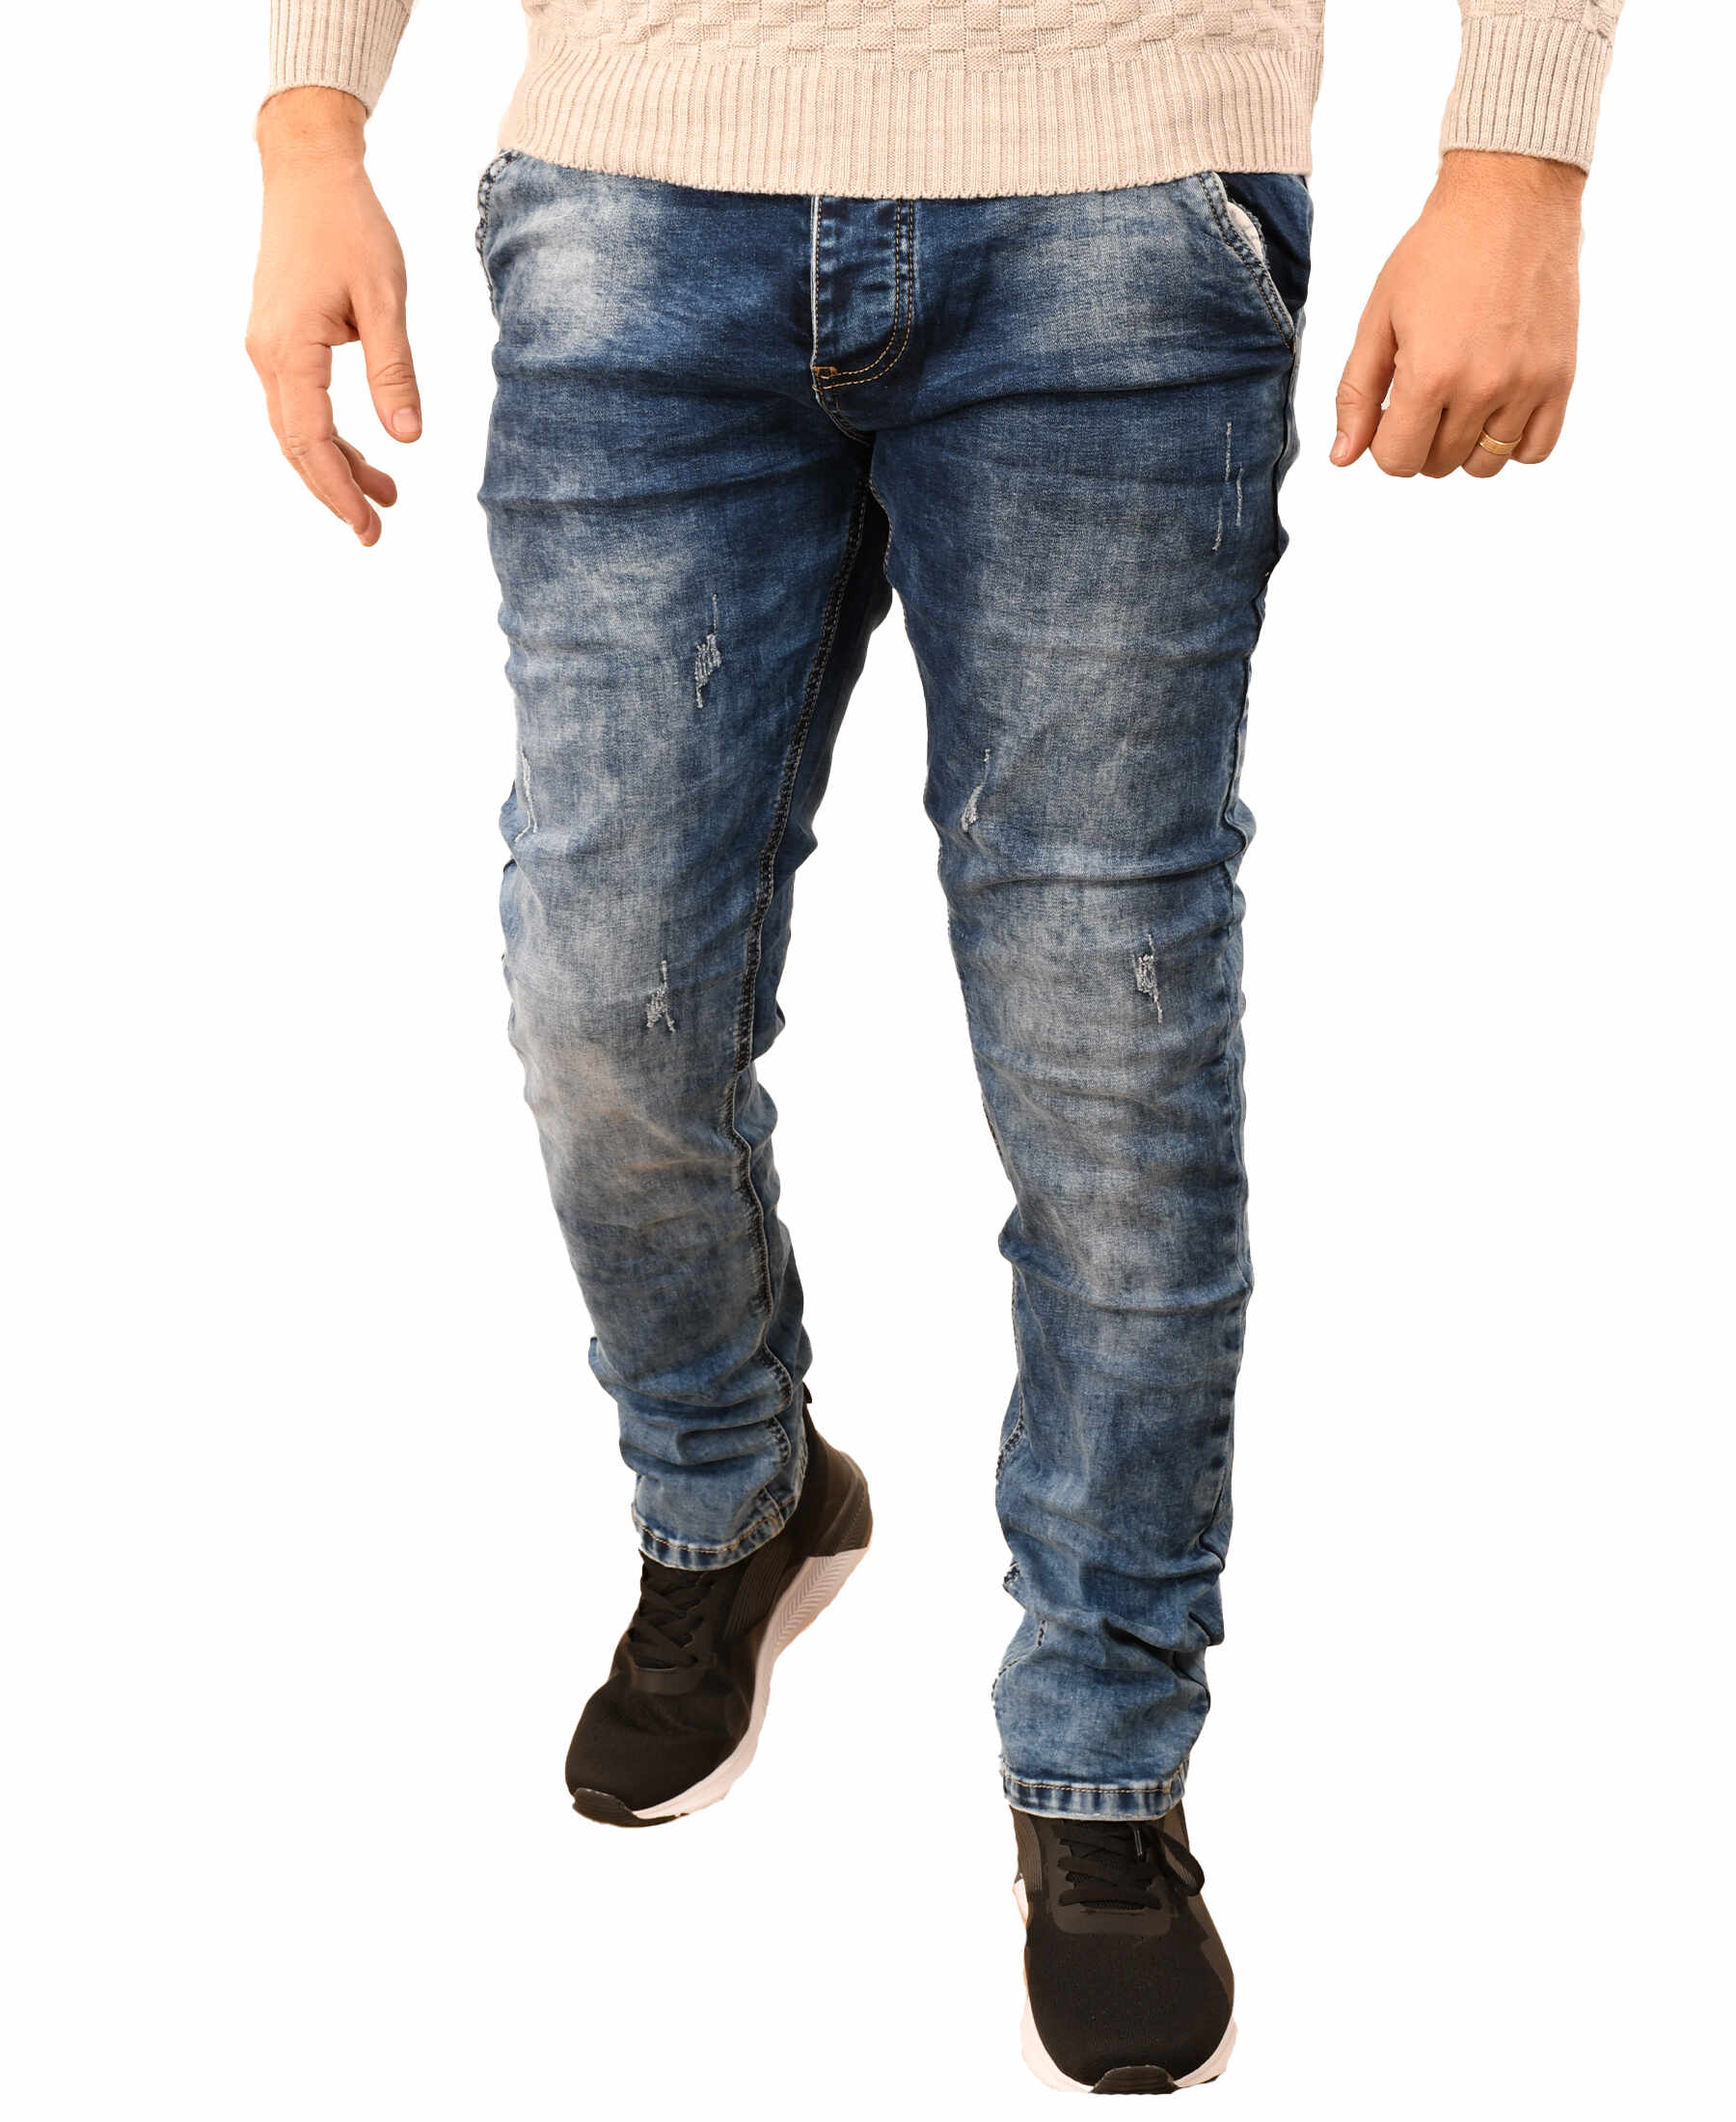 And jam Smash Blugi Adam Denim Jeans pentru barbat - cod 35212 - 360 produse